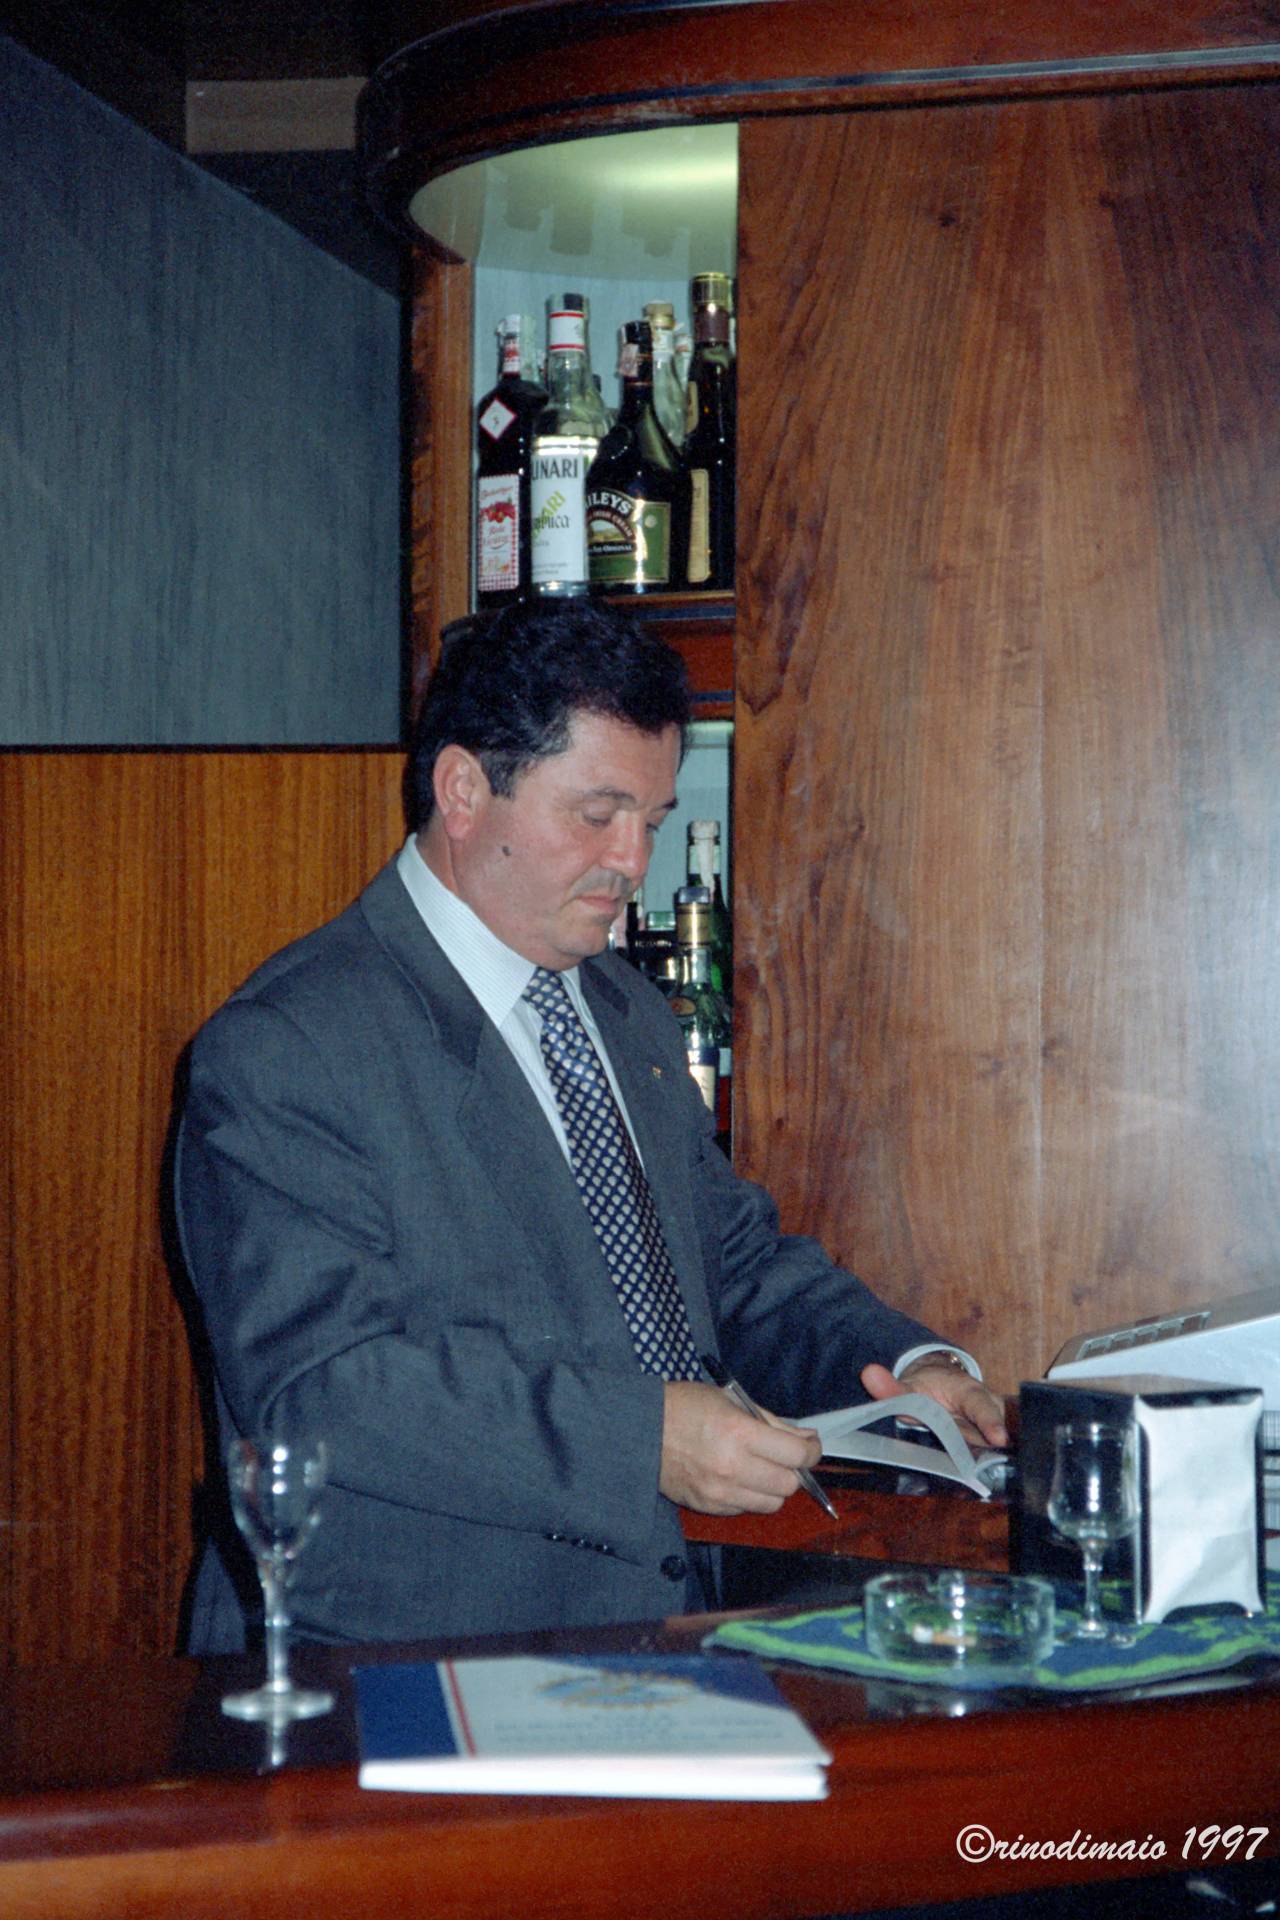 rdm ©rinodimaio-R.C.PERUGIA Conviviale Plaza-Presidente Antonioni 1997 n.06